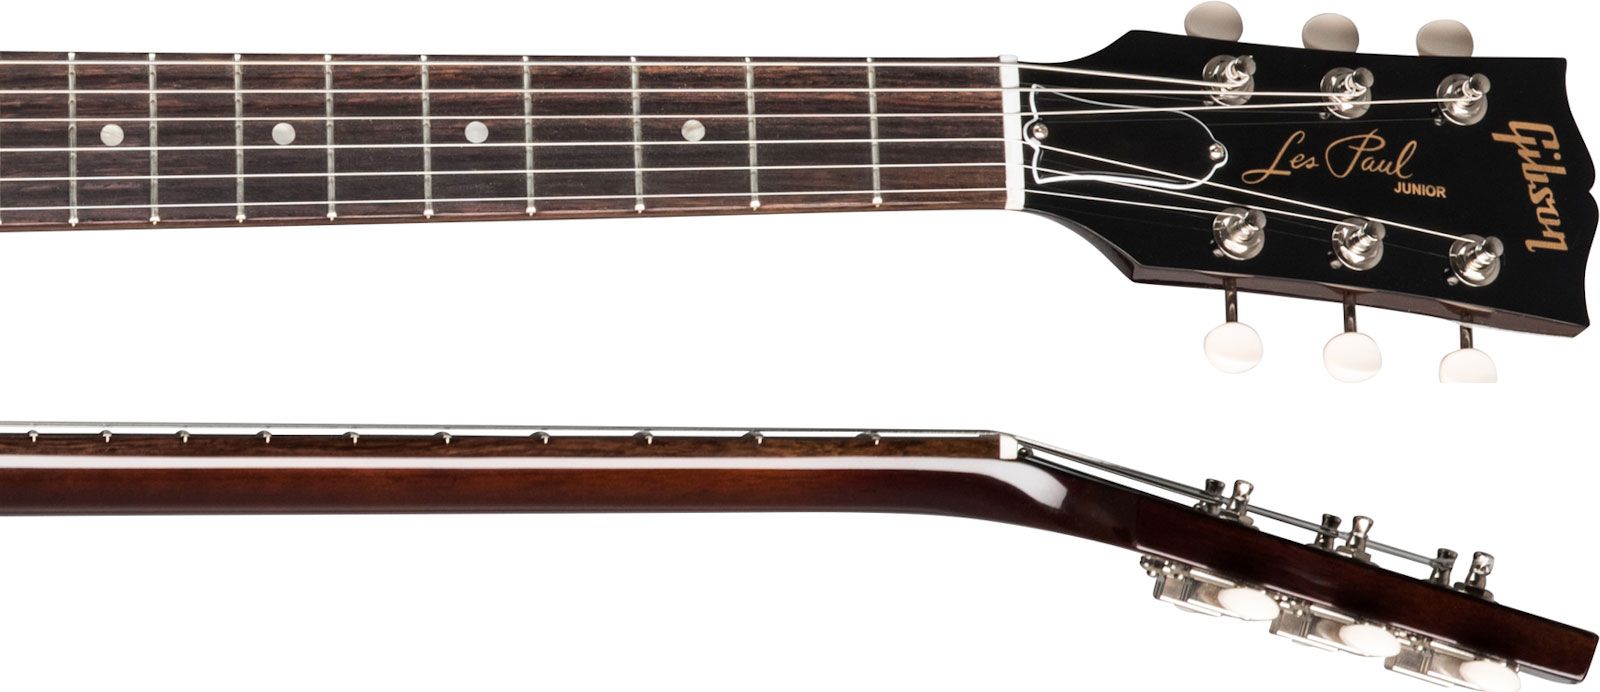 Gibson Les Paul Junior Original P90 Ht Rw - Vintage Tobacco Burst - Single cut electric guitar - Variation 3